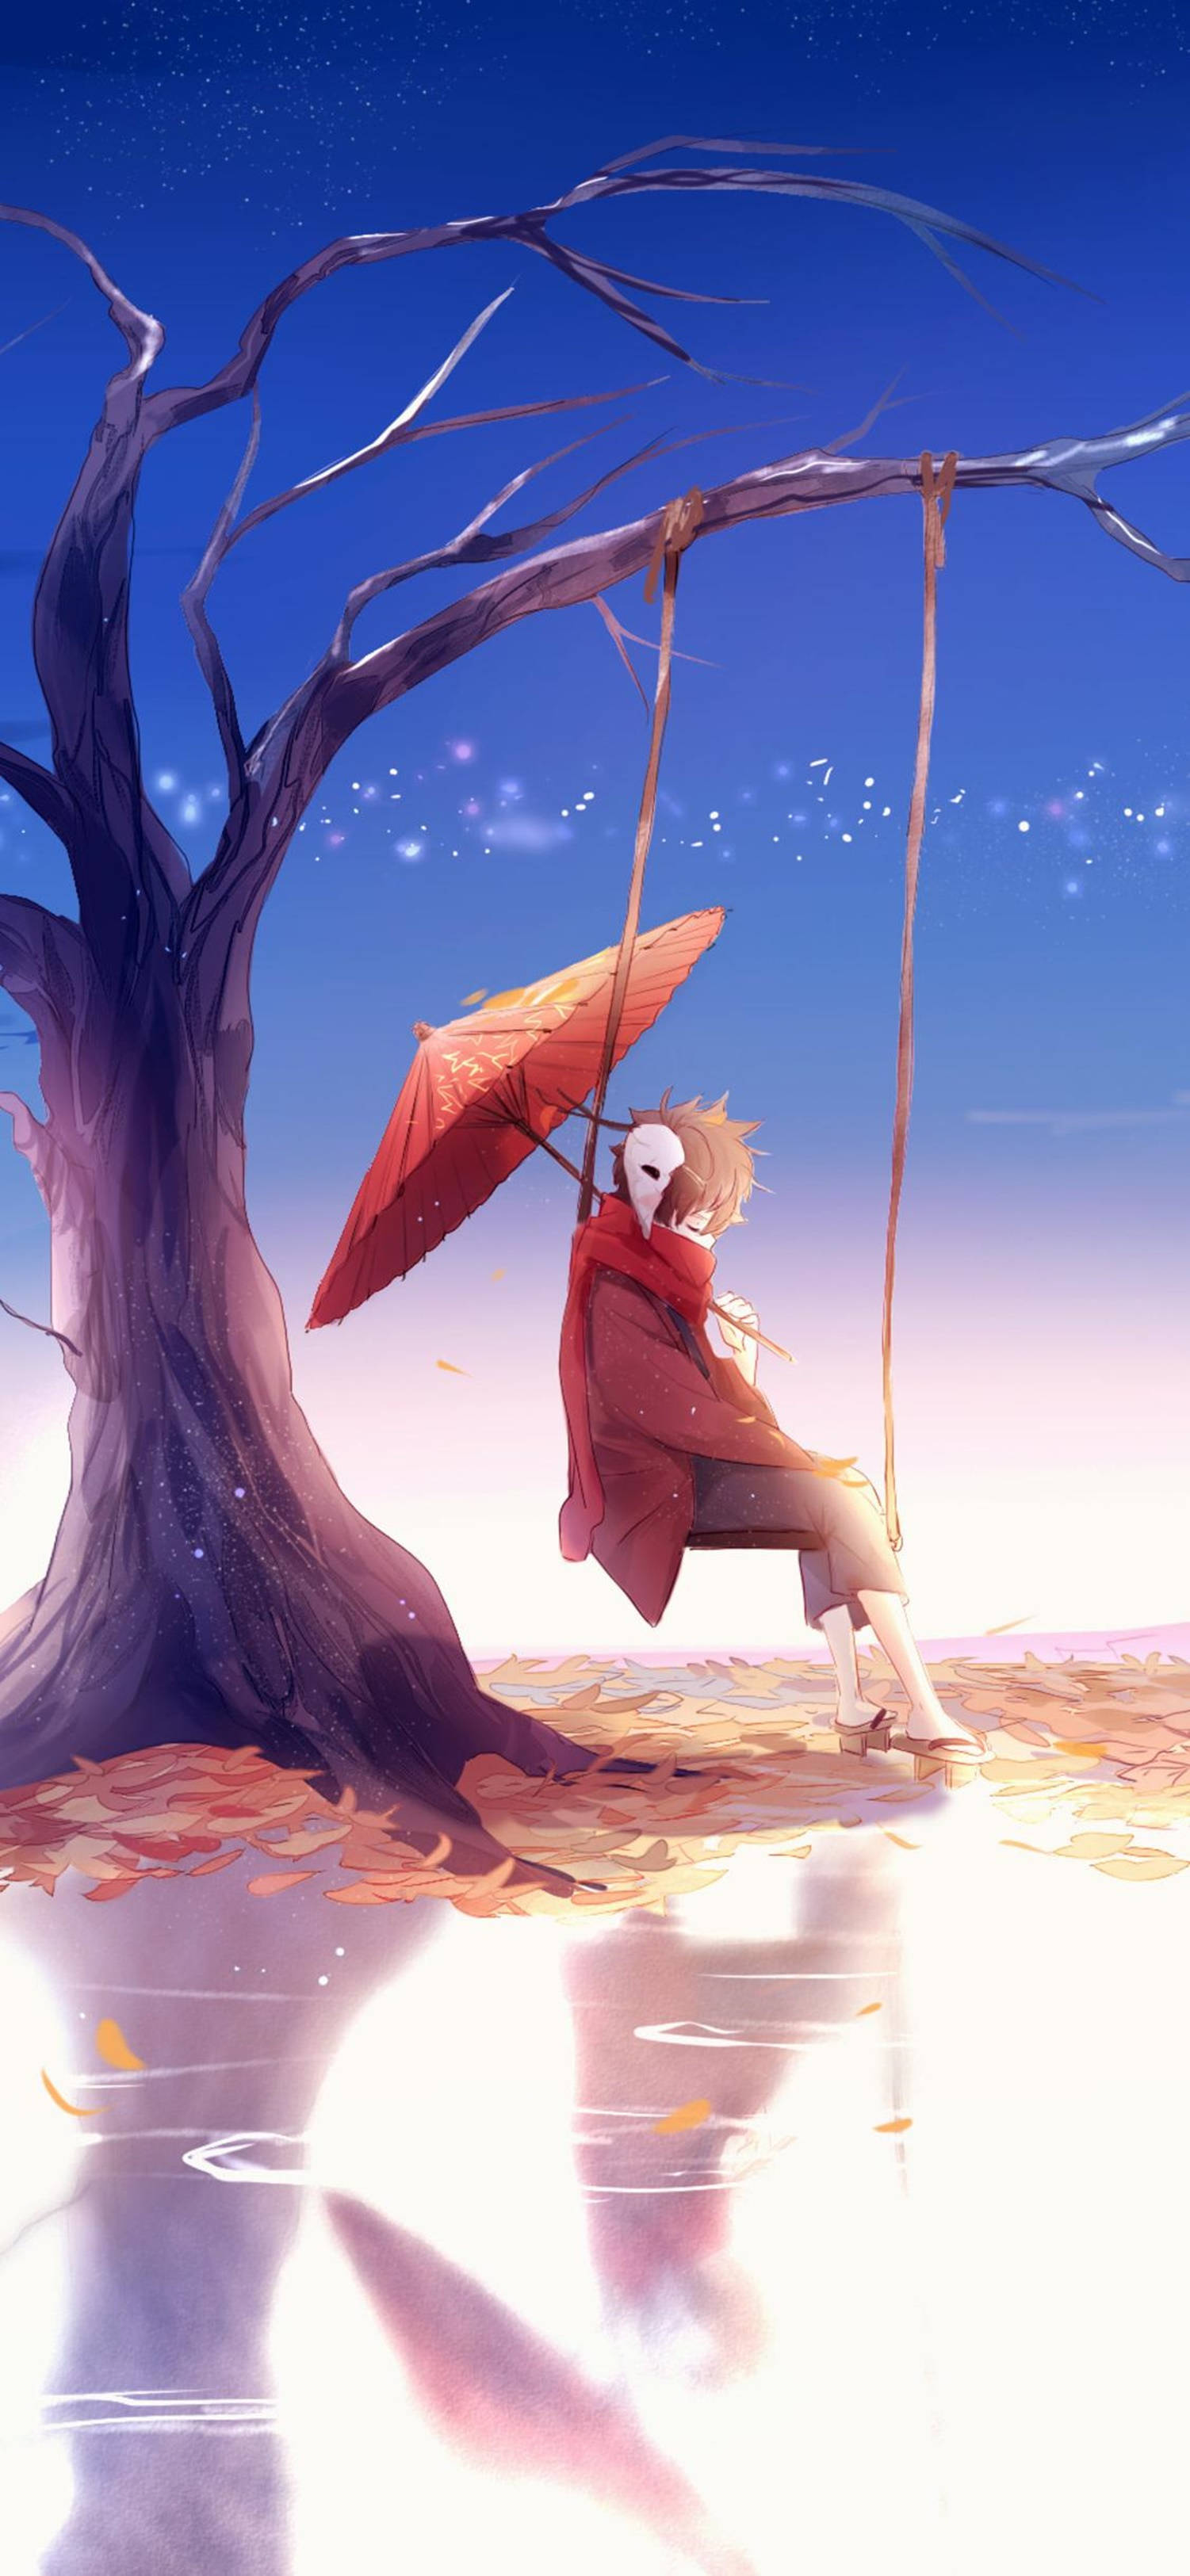 4k Anime Iphone Swing Boy With Umbrella Background